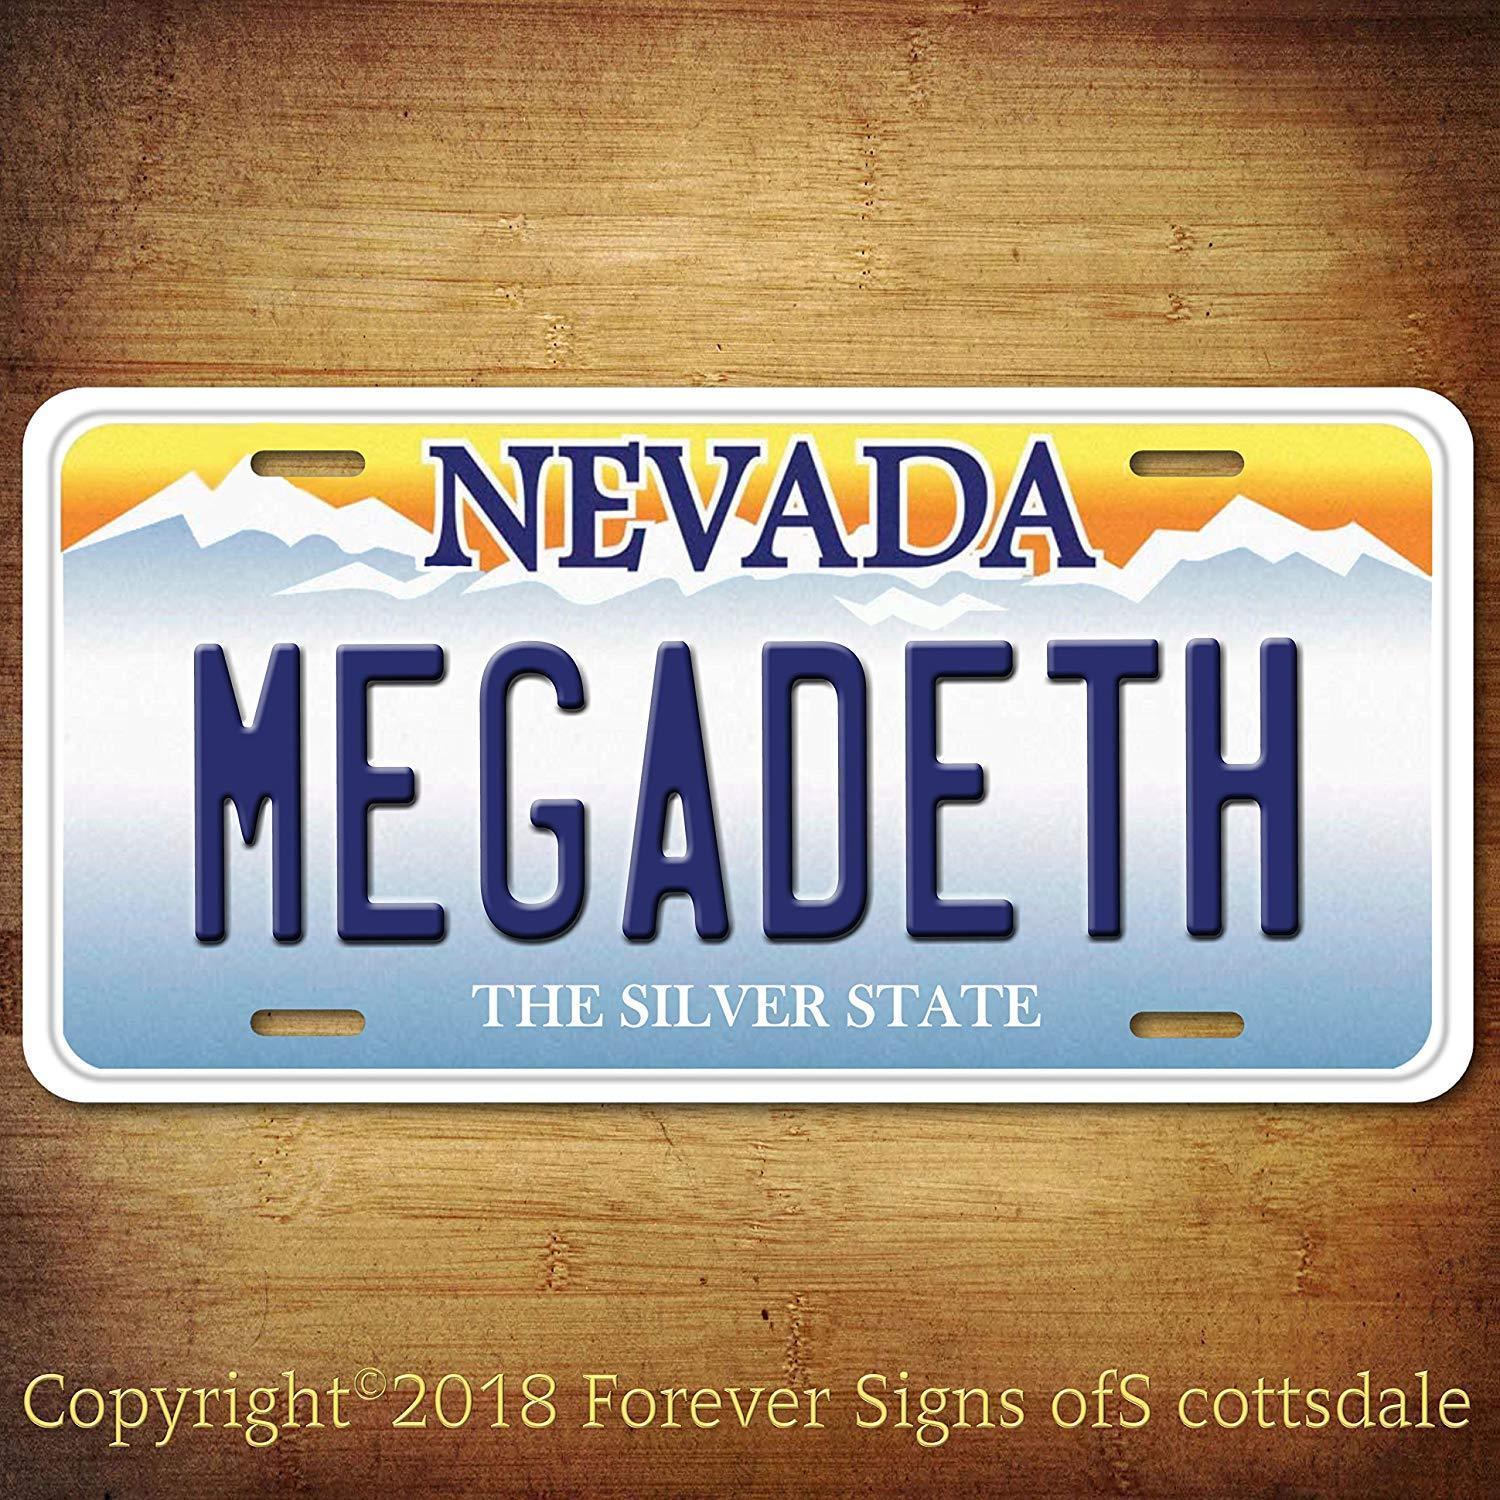 Megadeth Heavy Metal Band Oklahoma State Vanity Aluminum License Plate Tag